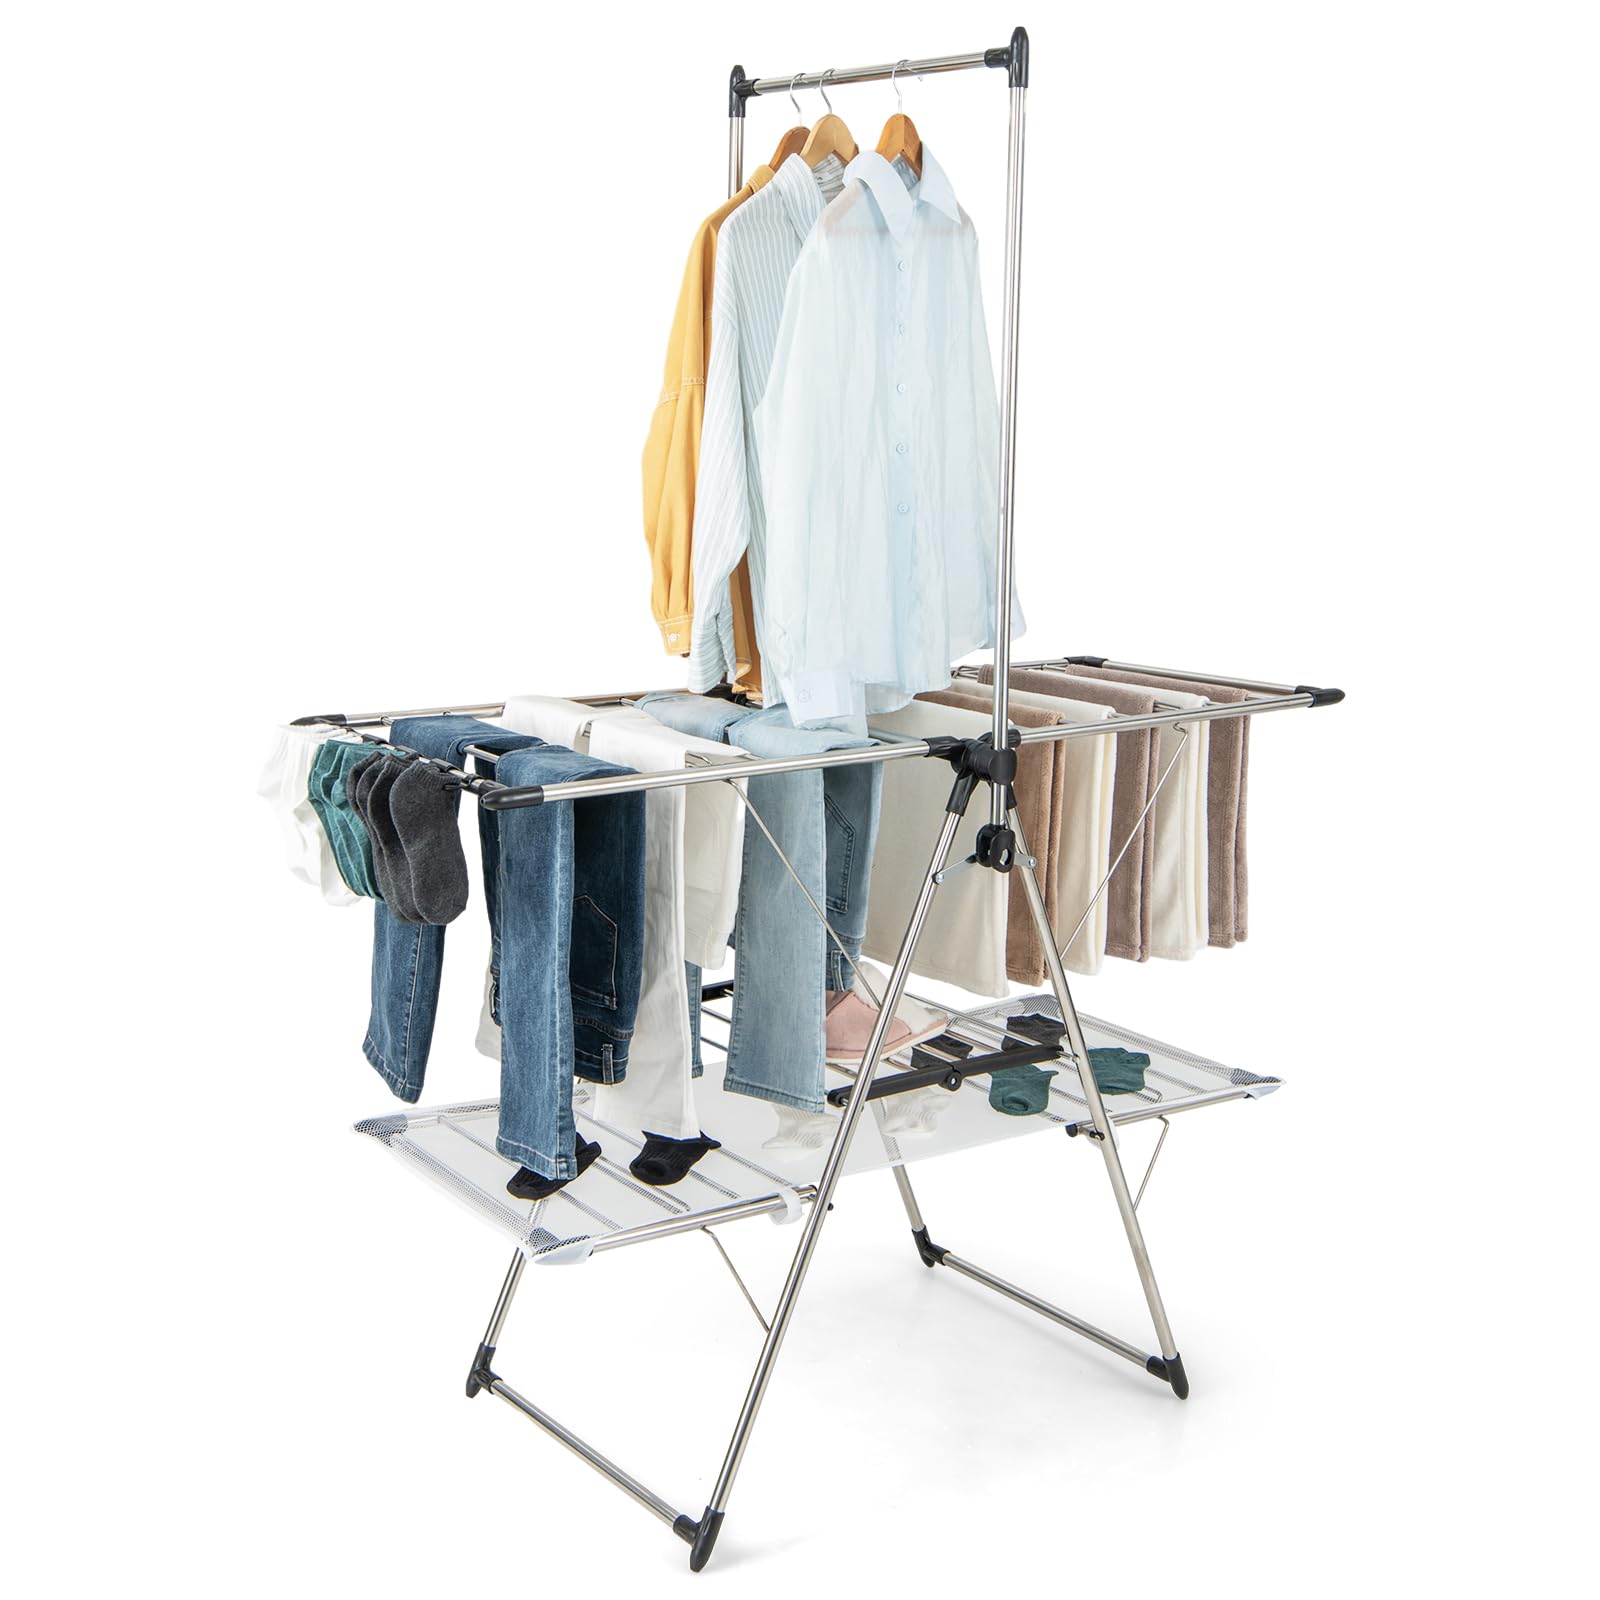 Giantex Clothes Drying Rack